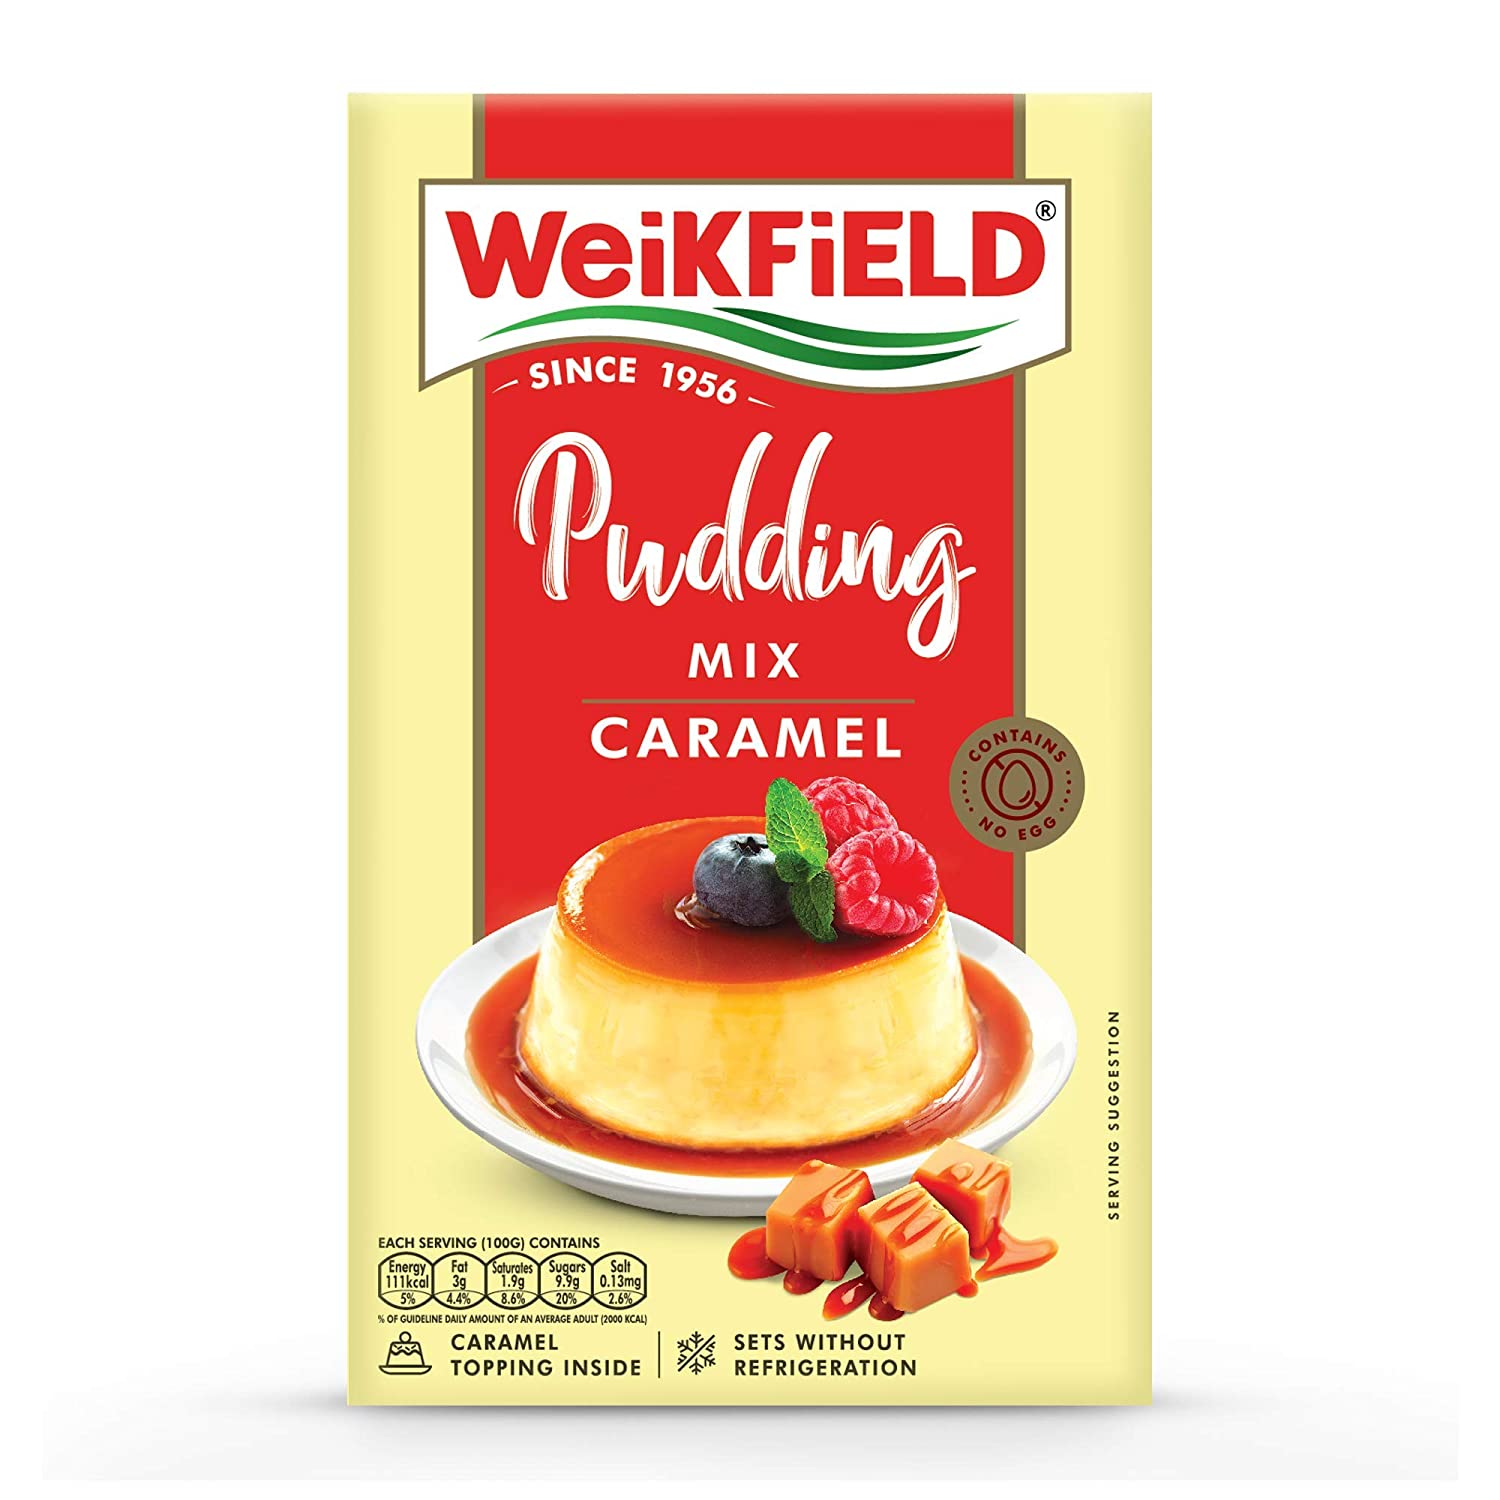 Weikfield Caramel Pudding Mix Image